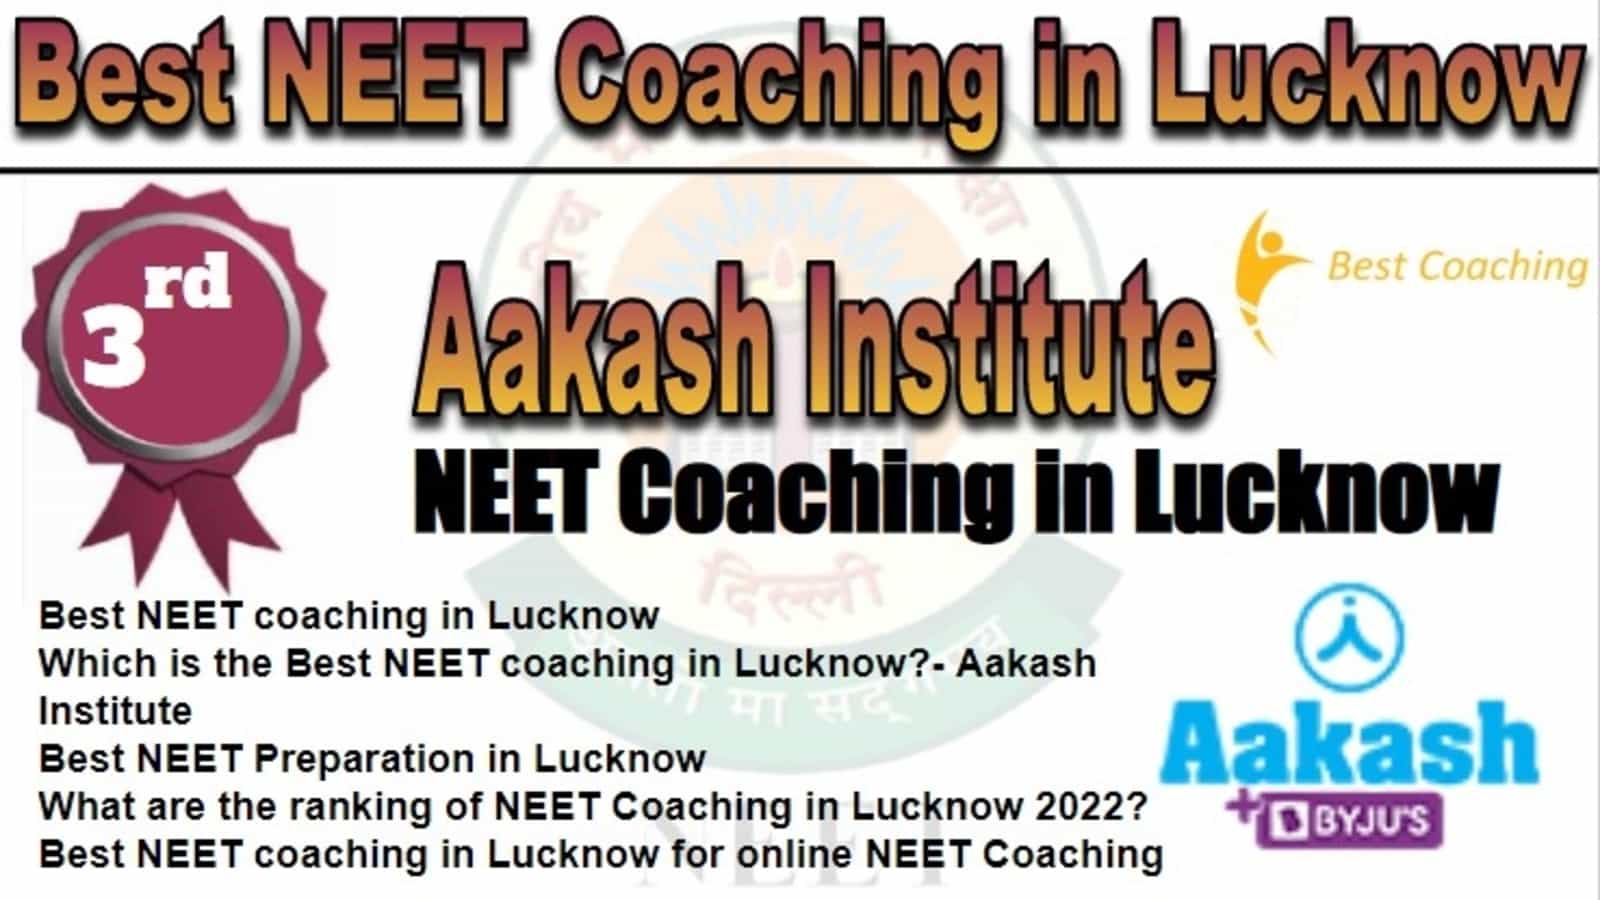 Rank 3 Best NEET Coaching in Lucknow